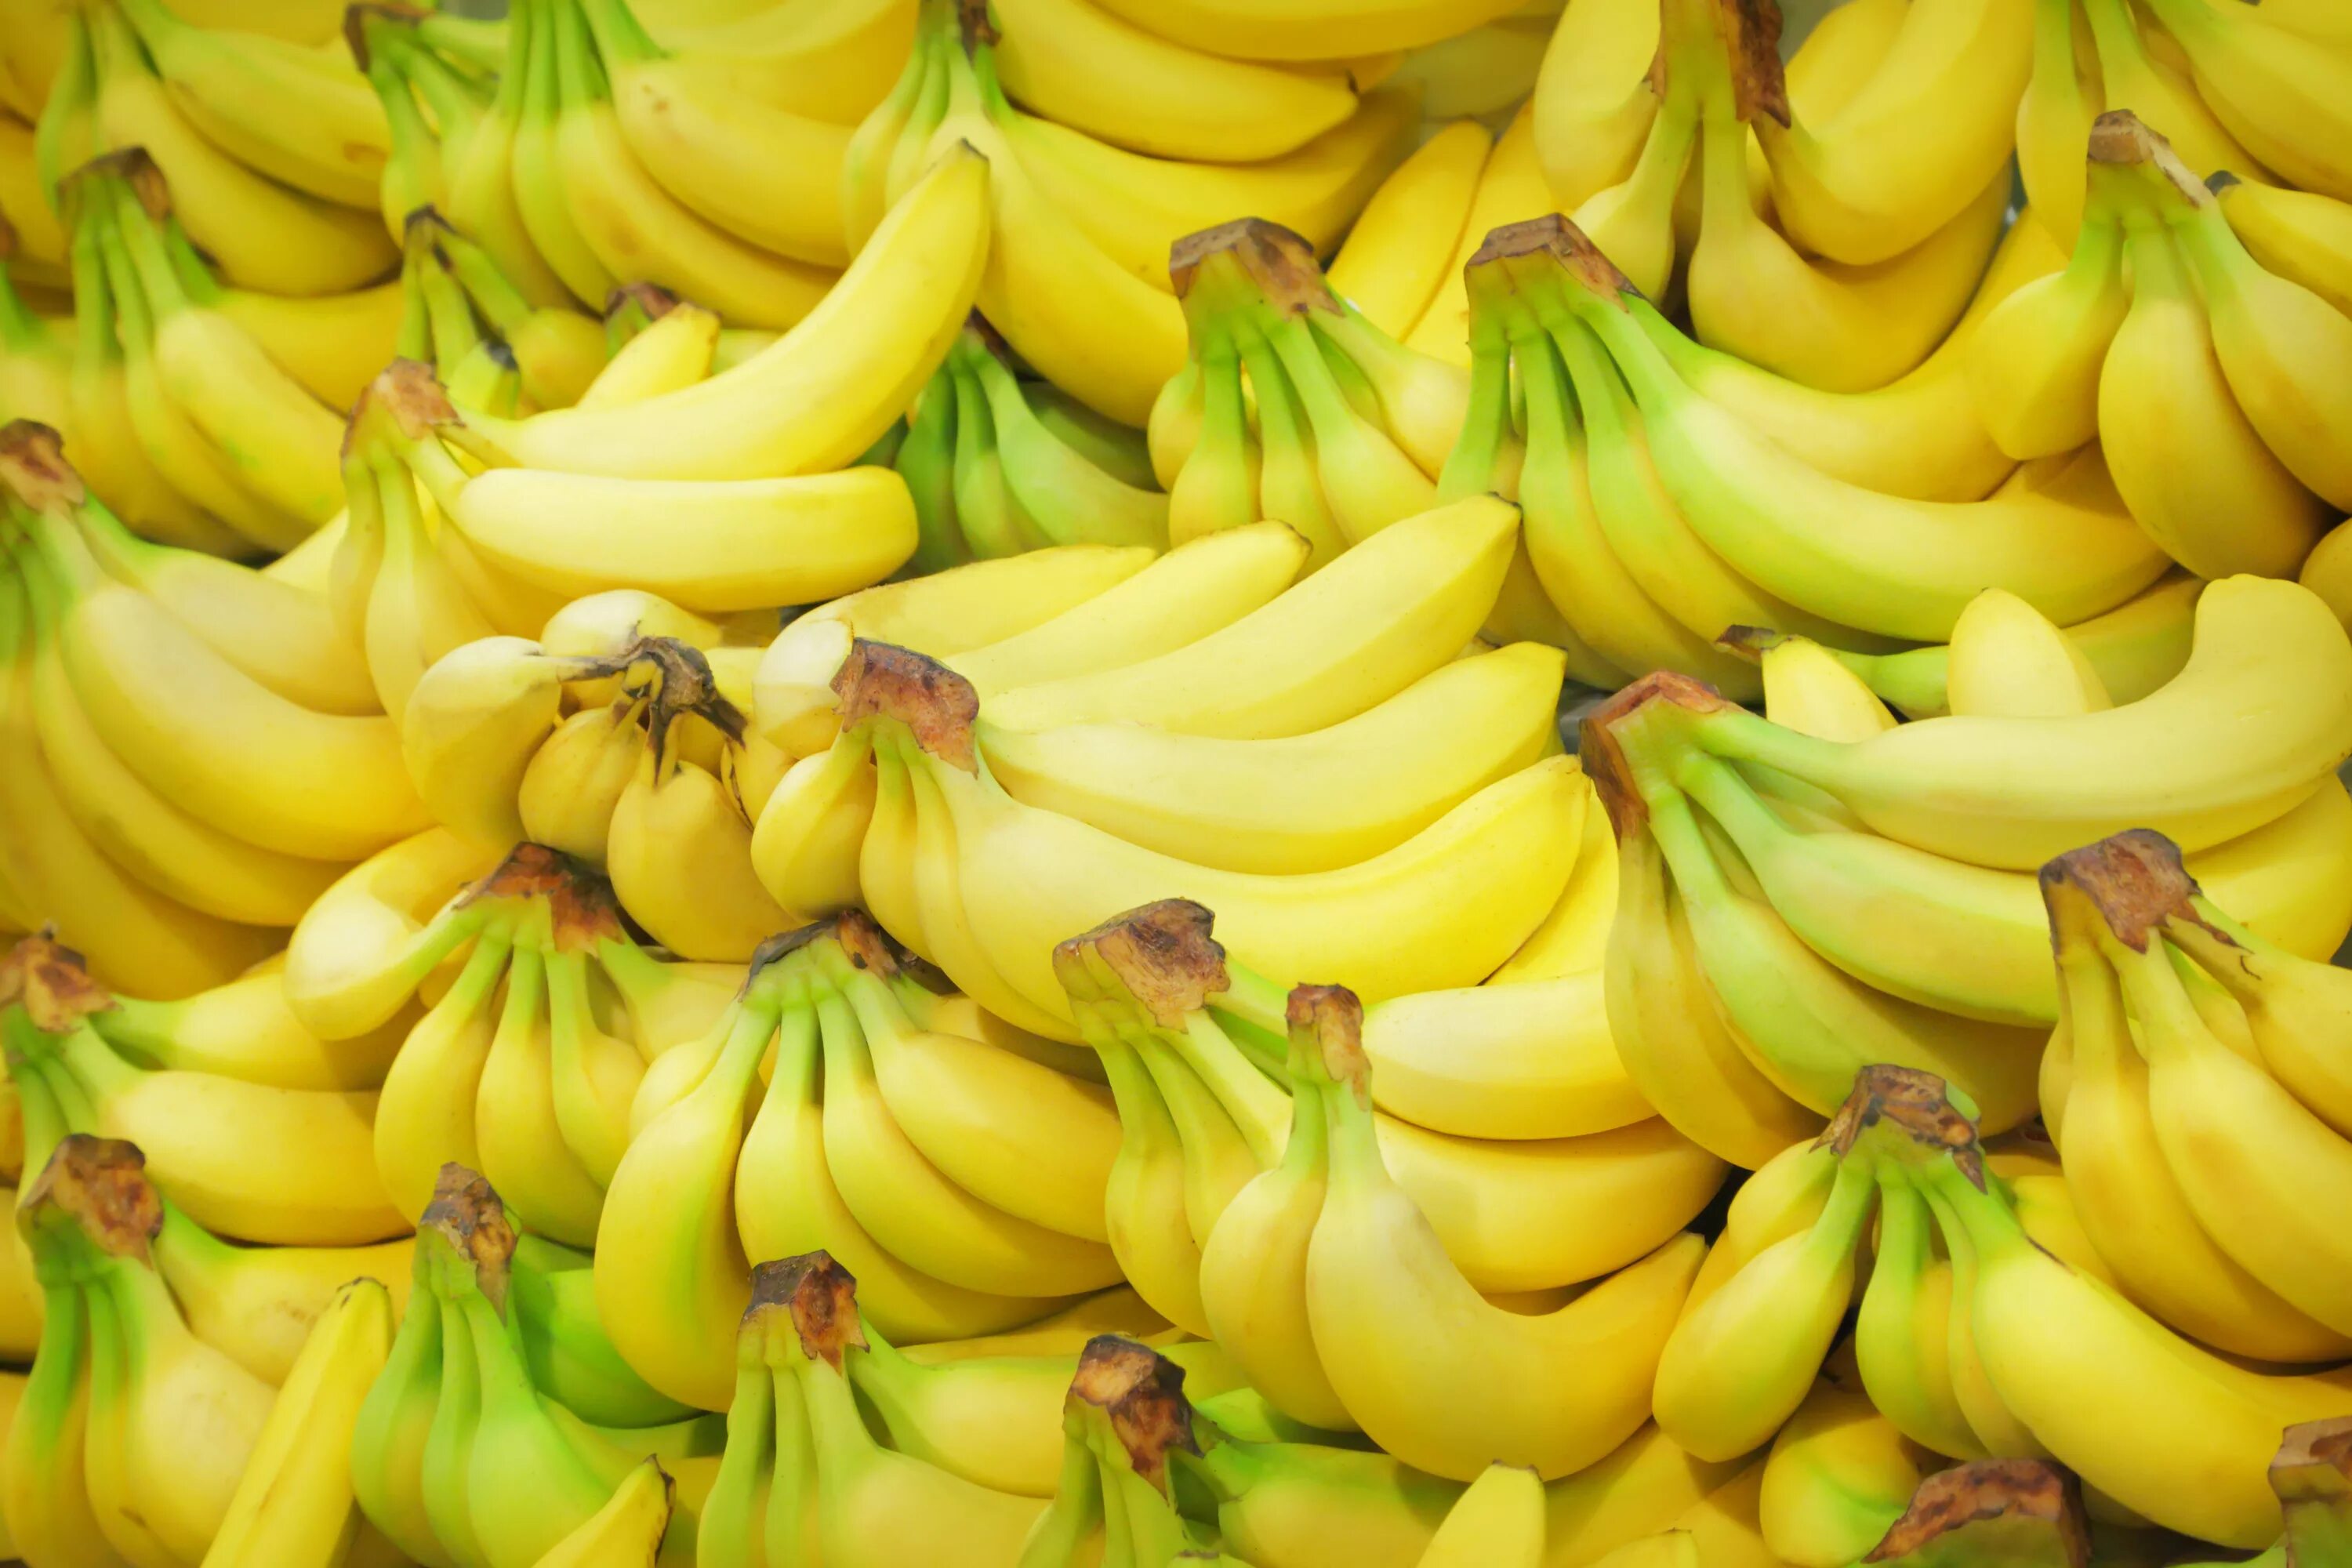 Few bananas